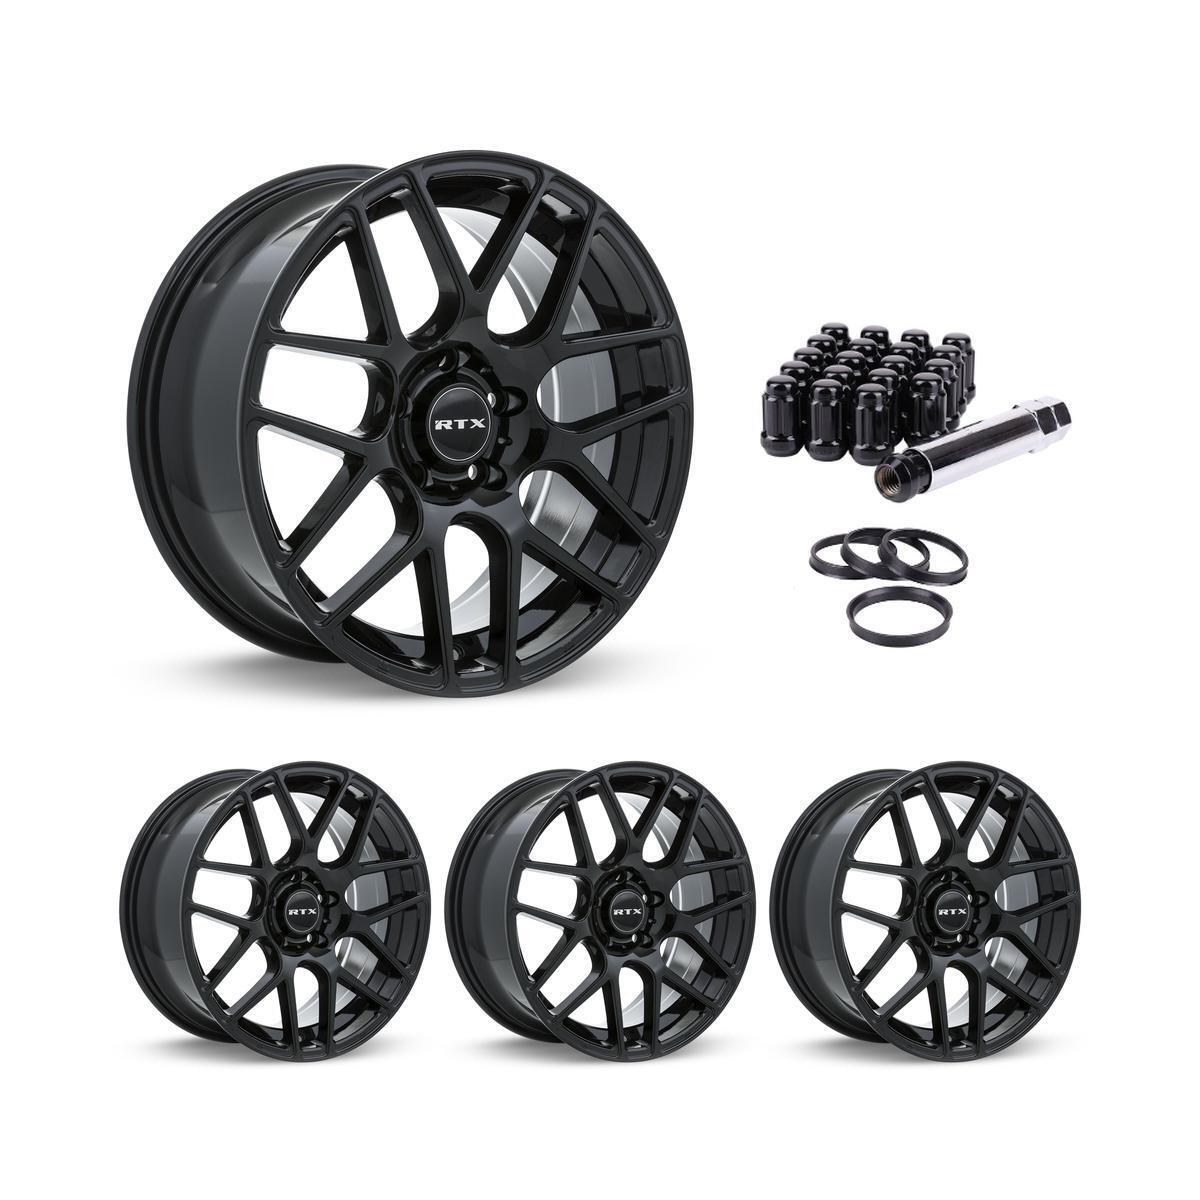 Wheel Rims Set with Black Lug Nuts Kit for 82-94 Pontiac Sunbird P884102 16 inch